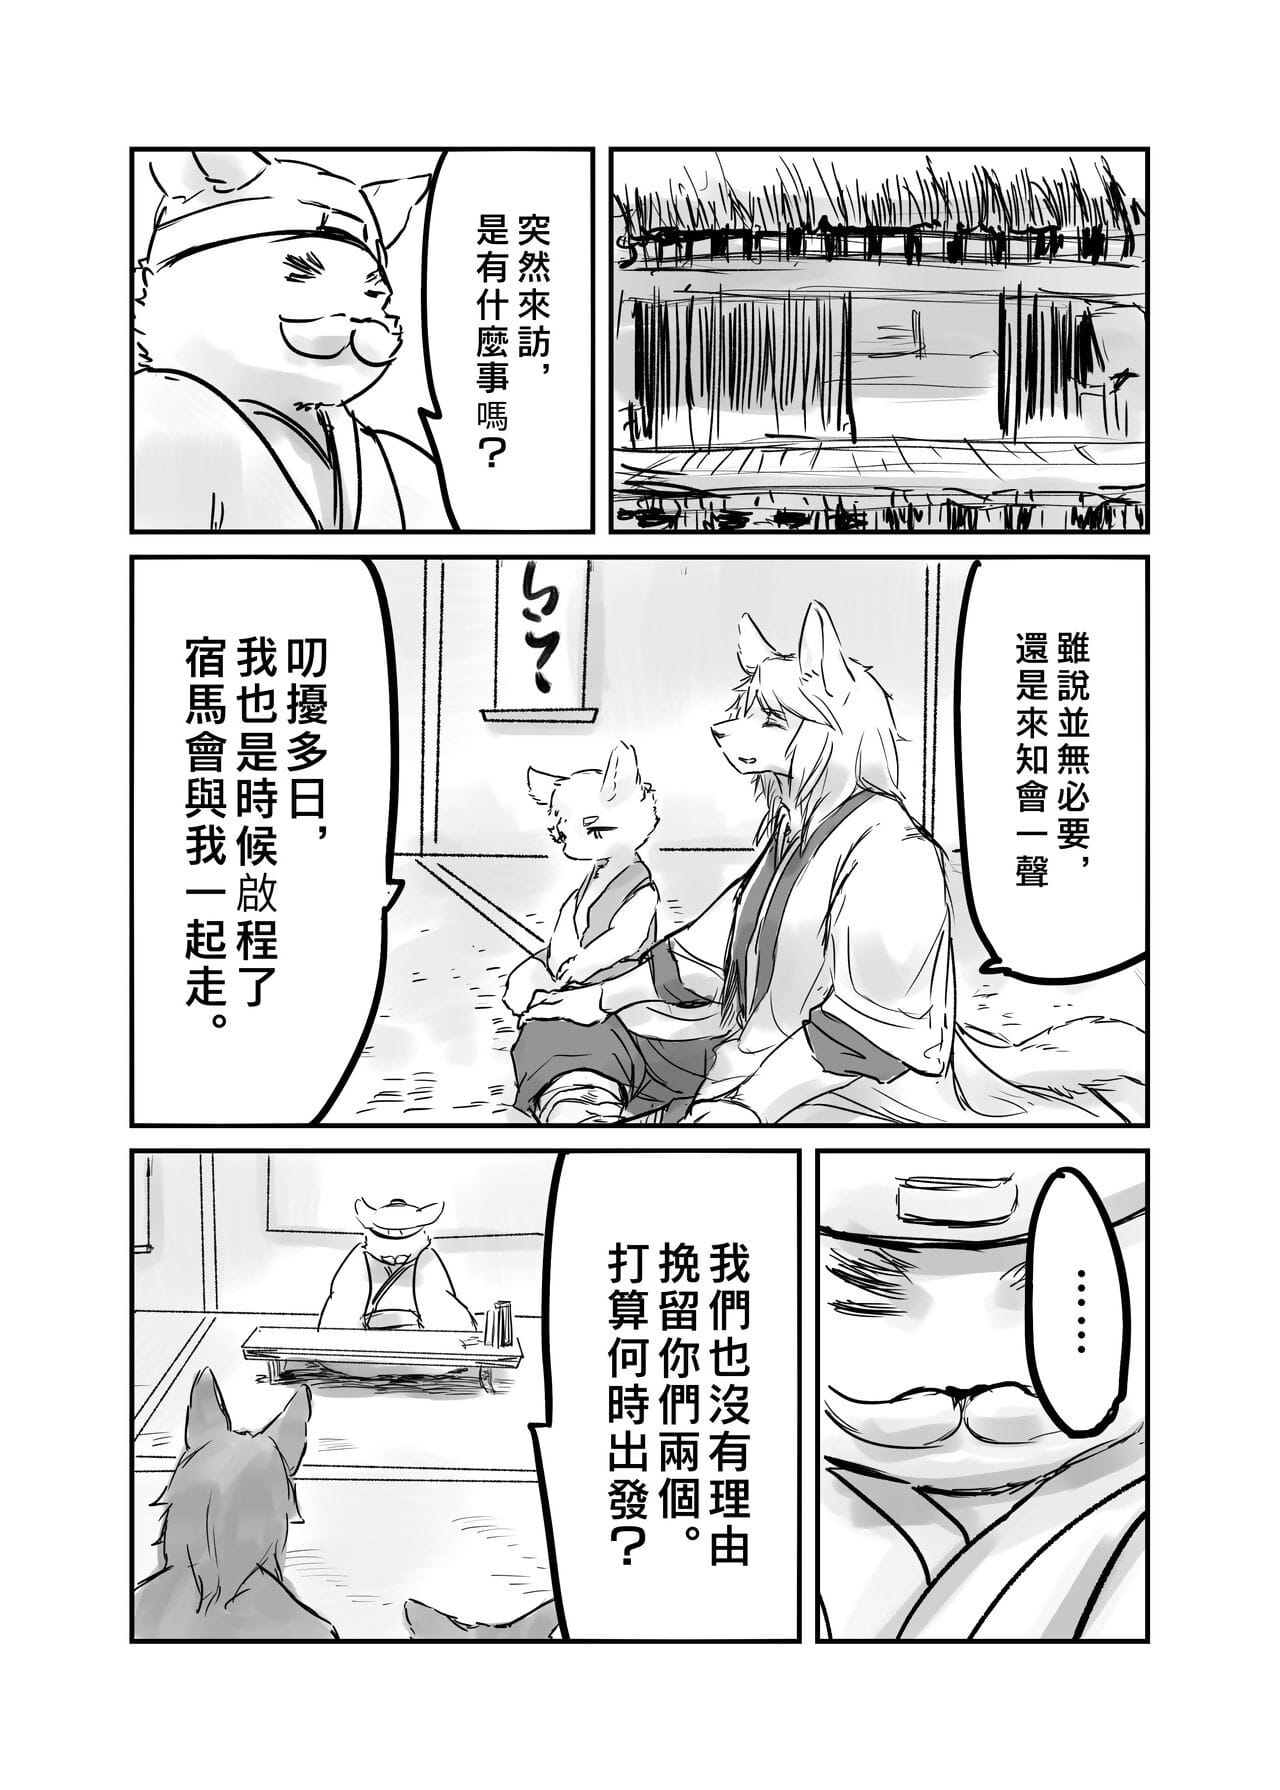 （the เยี่ยม 他乡之人 by：鬼流 ส่วนหนึ่ง 2 page 1